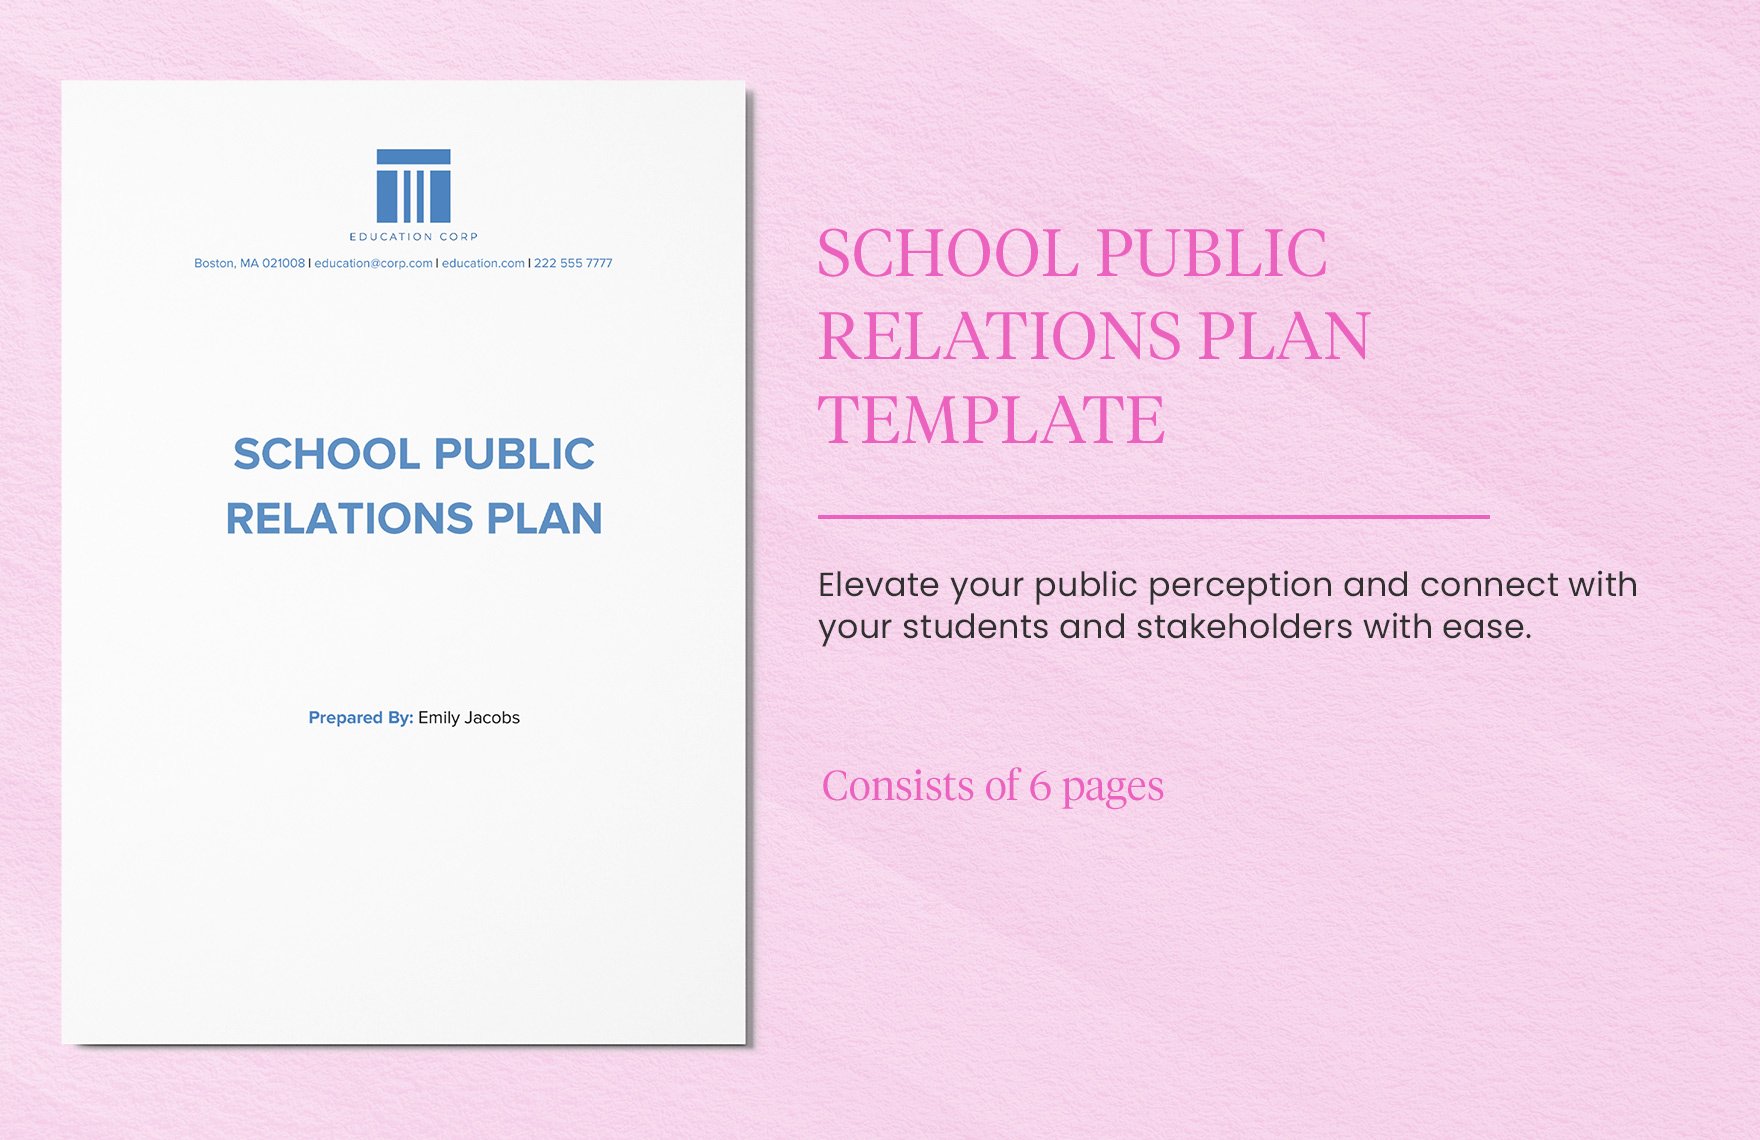 School Public Relations Plan Template in Word, Google Docs, PDF